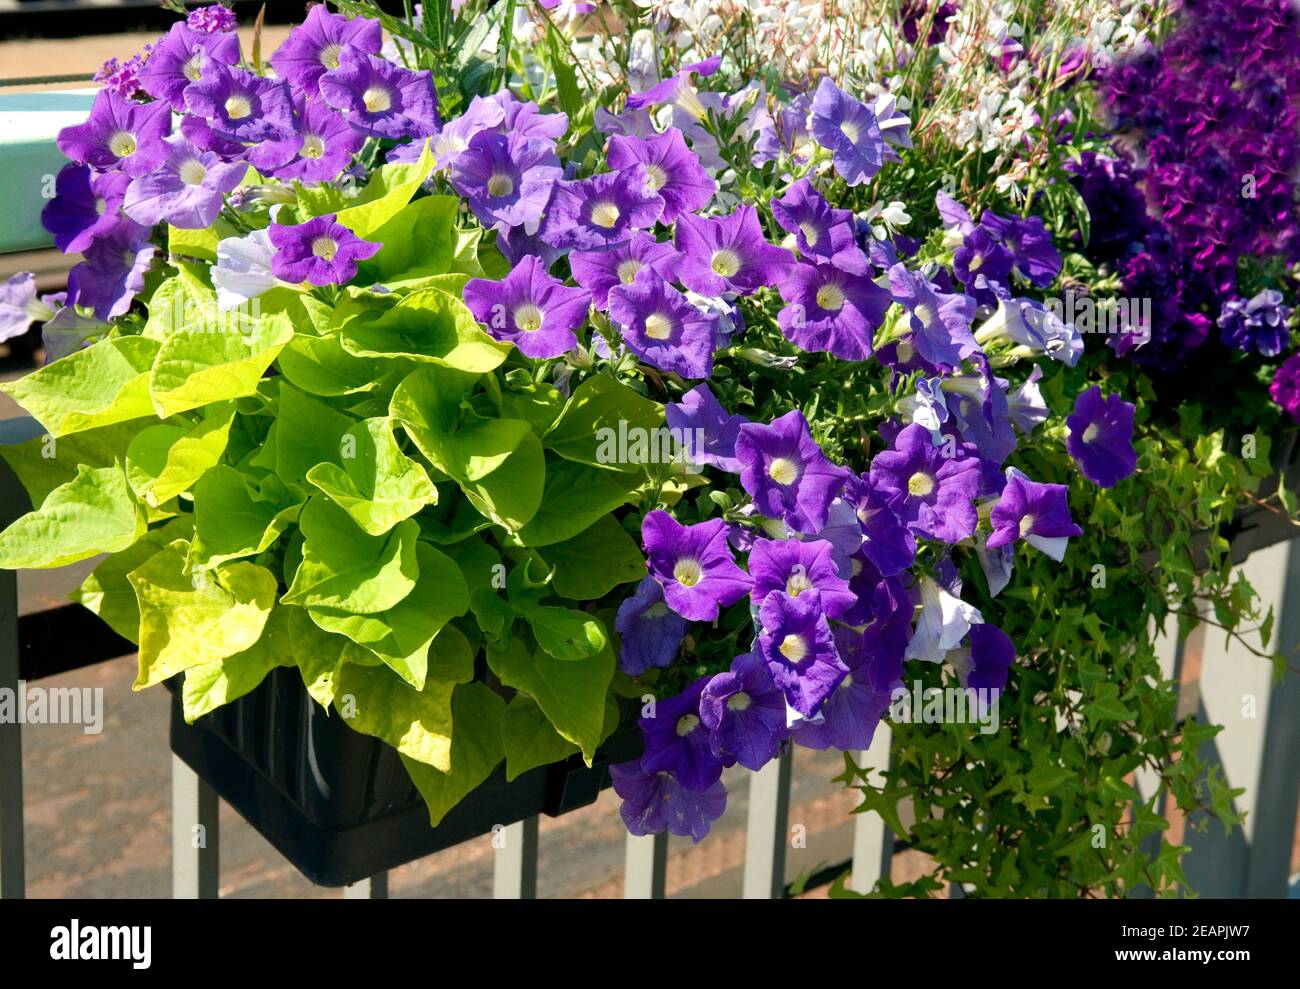 Balkonblumen, Surfina, Suesskartoffel Stock Photo - Alamy